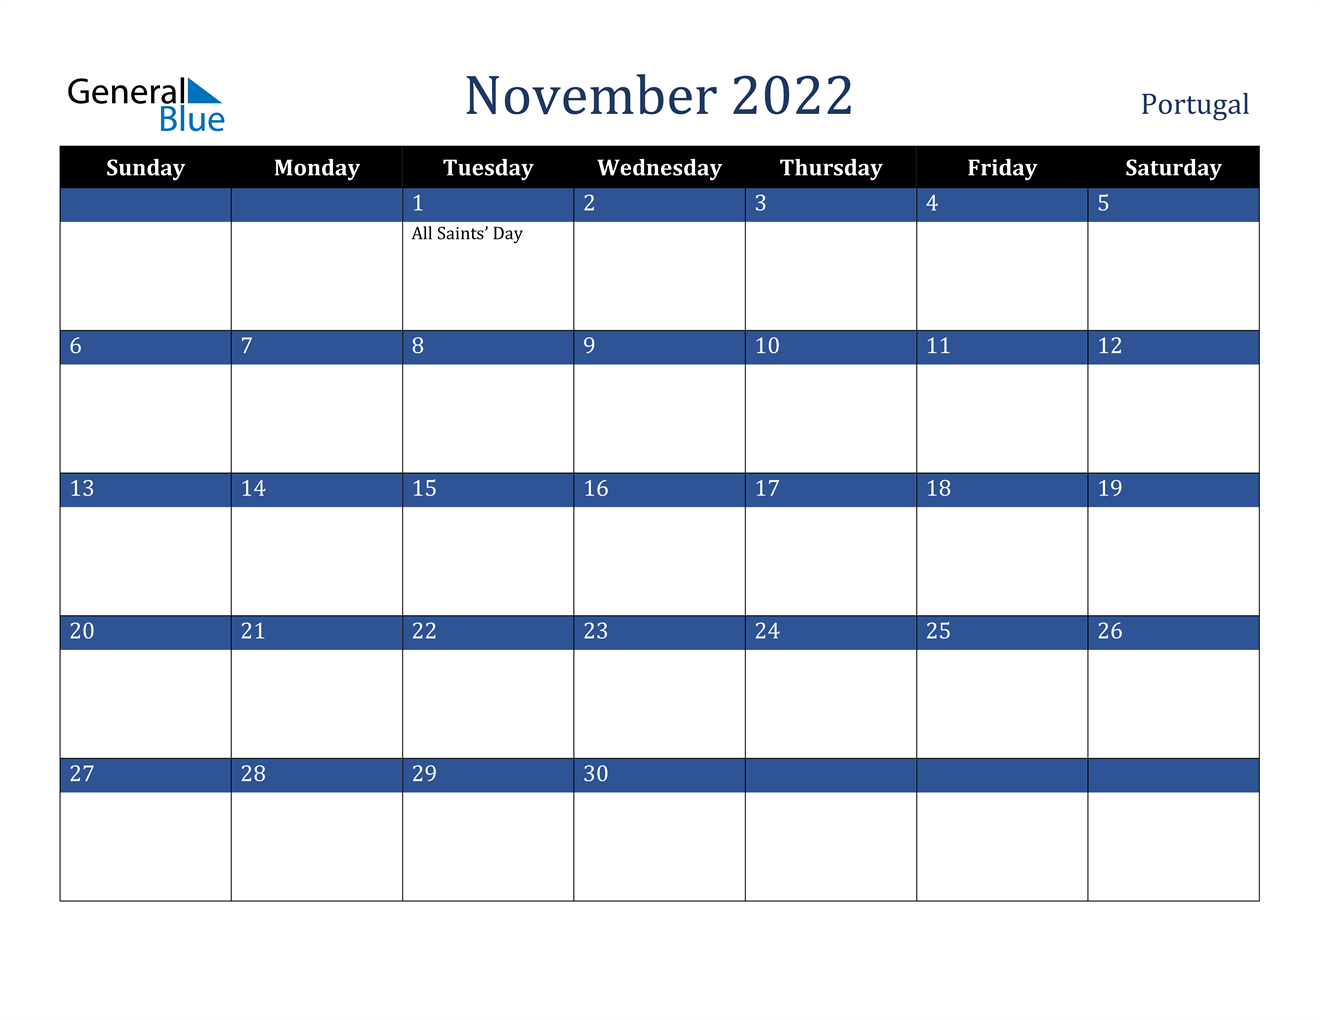 Get Calendar November 2022 Printable